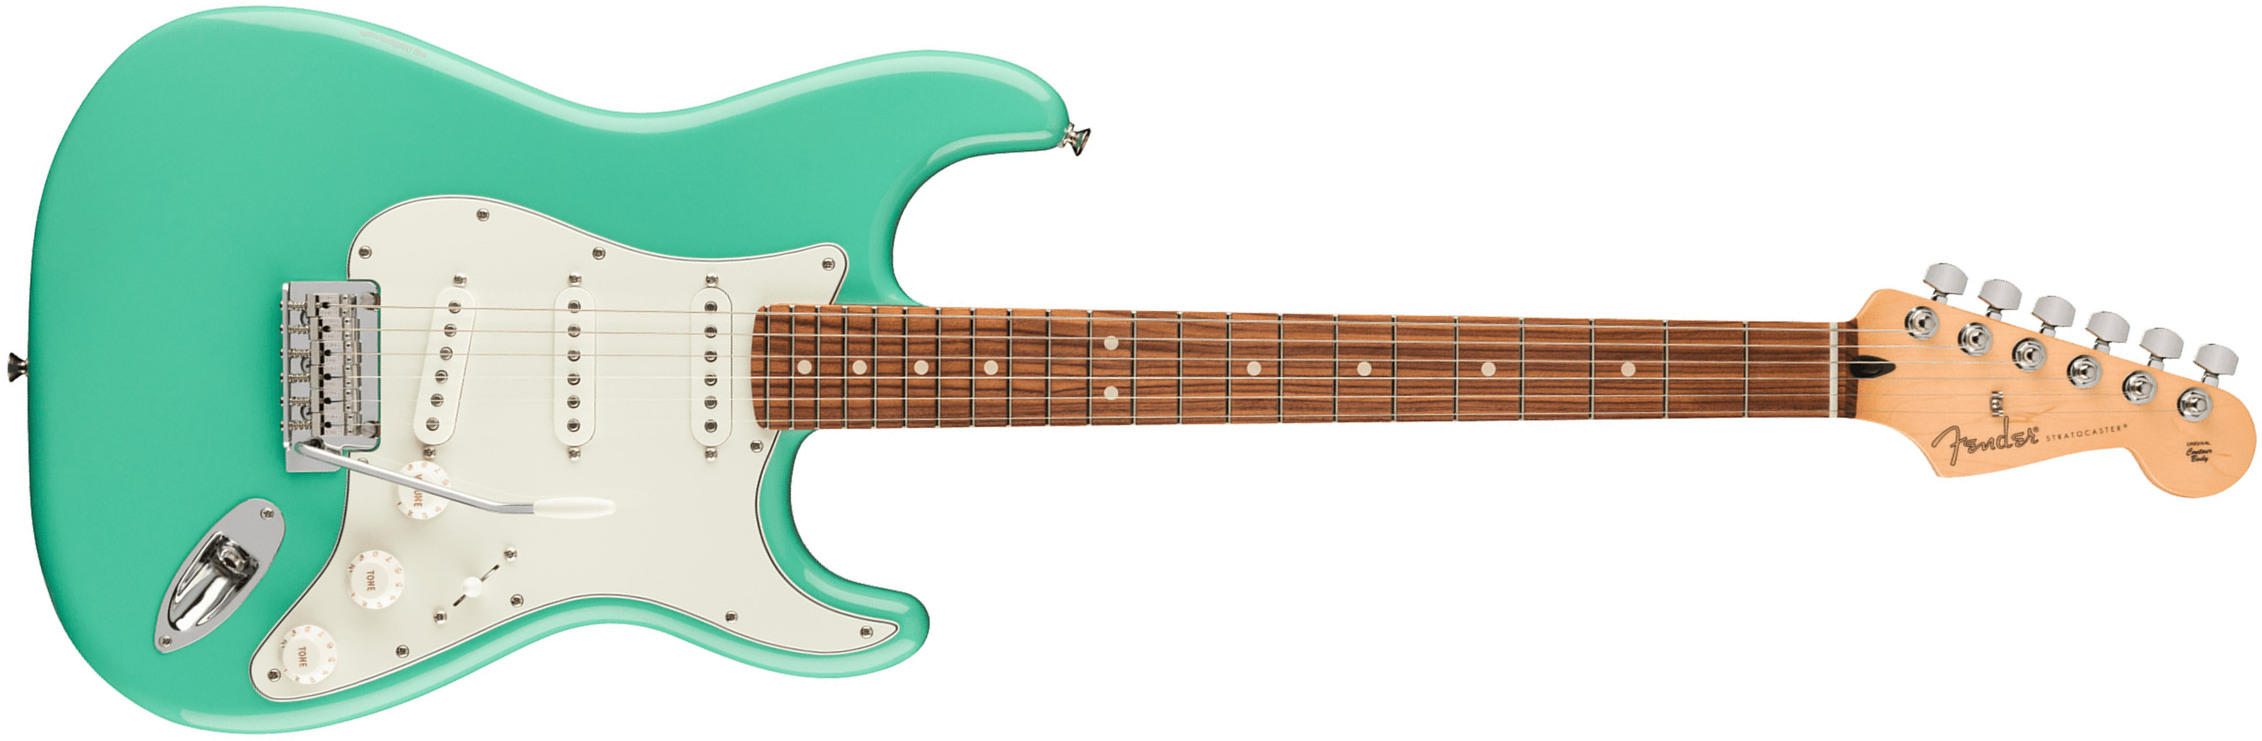 Fender Strat Player Mex 2023 3s Trem Pf - Seafoam Green - E-Gitarre in Str-Form - Main picture